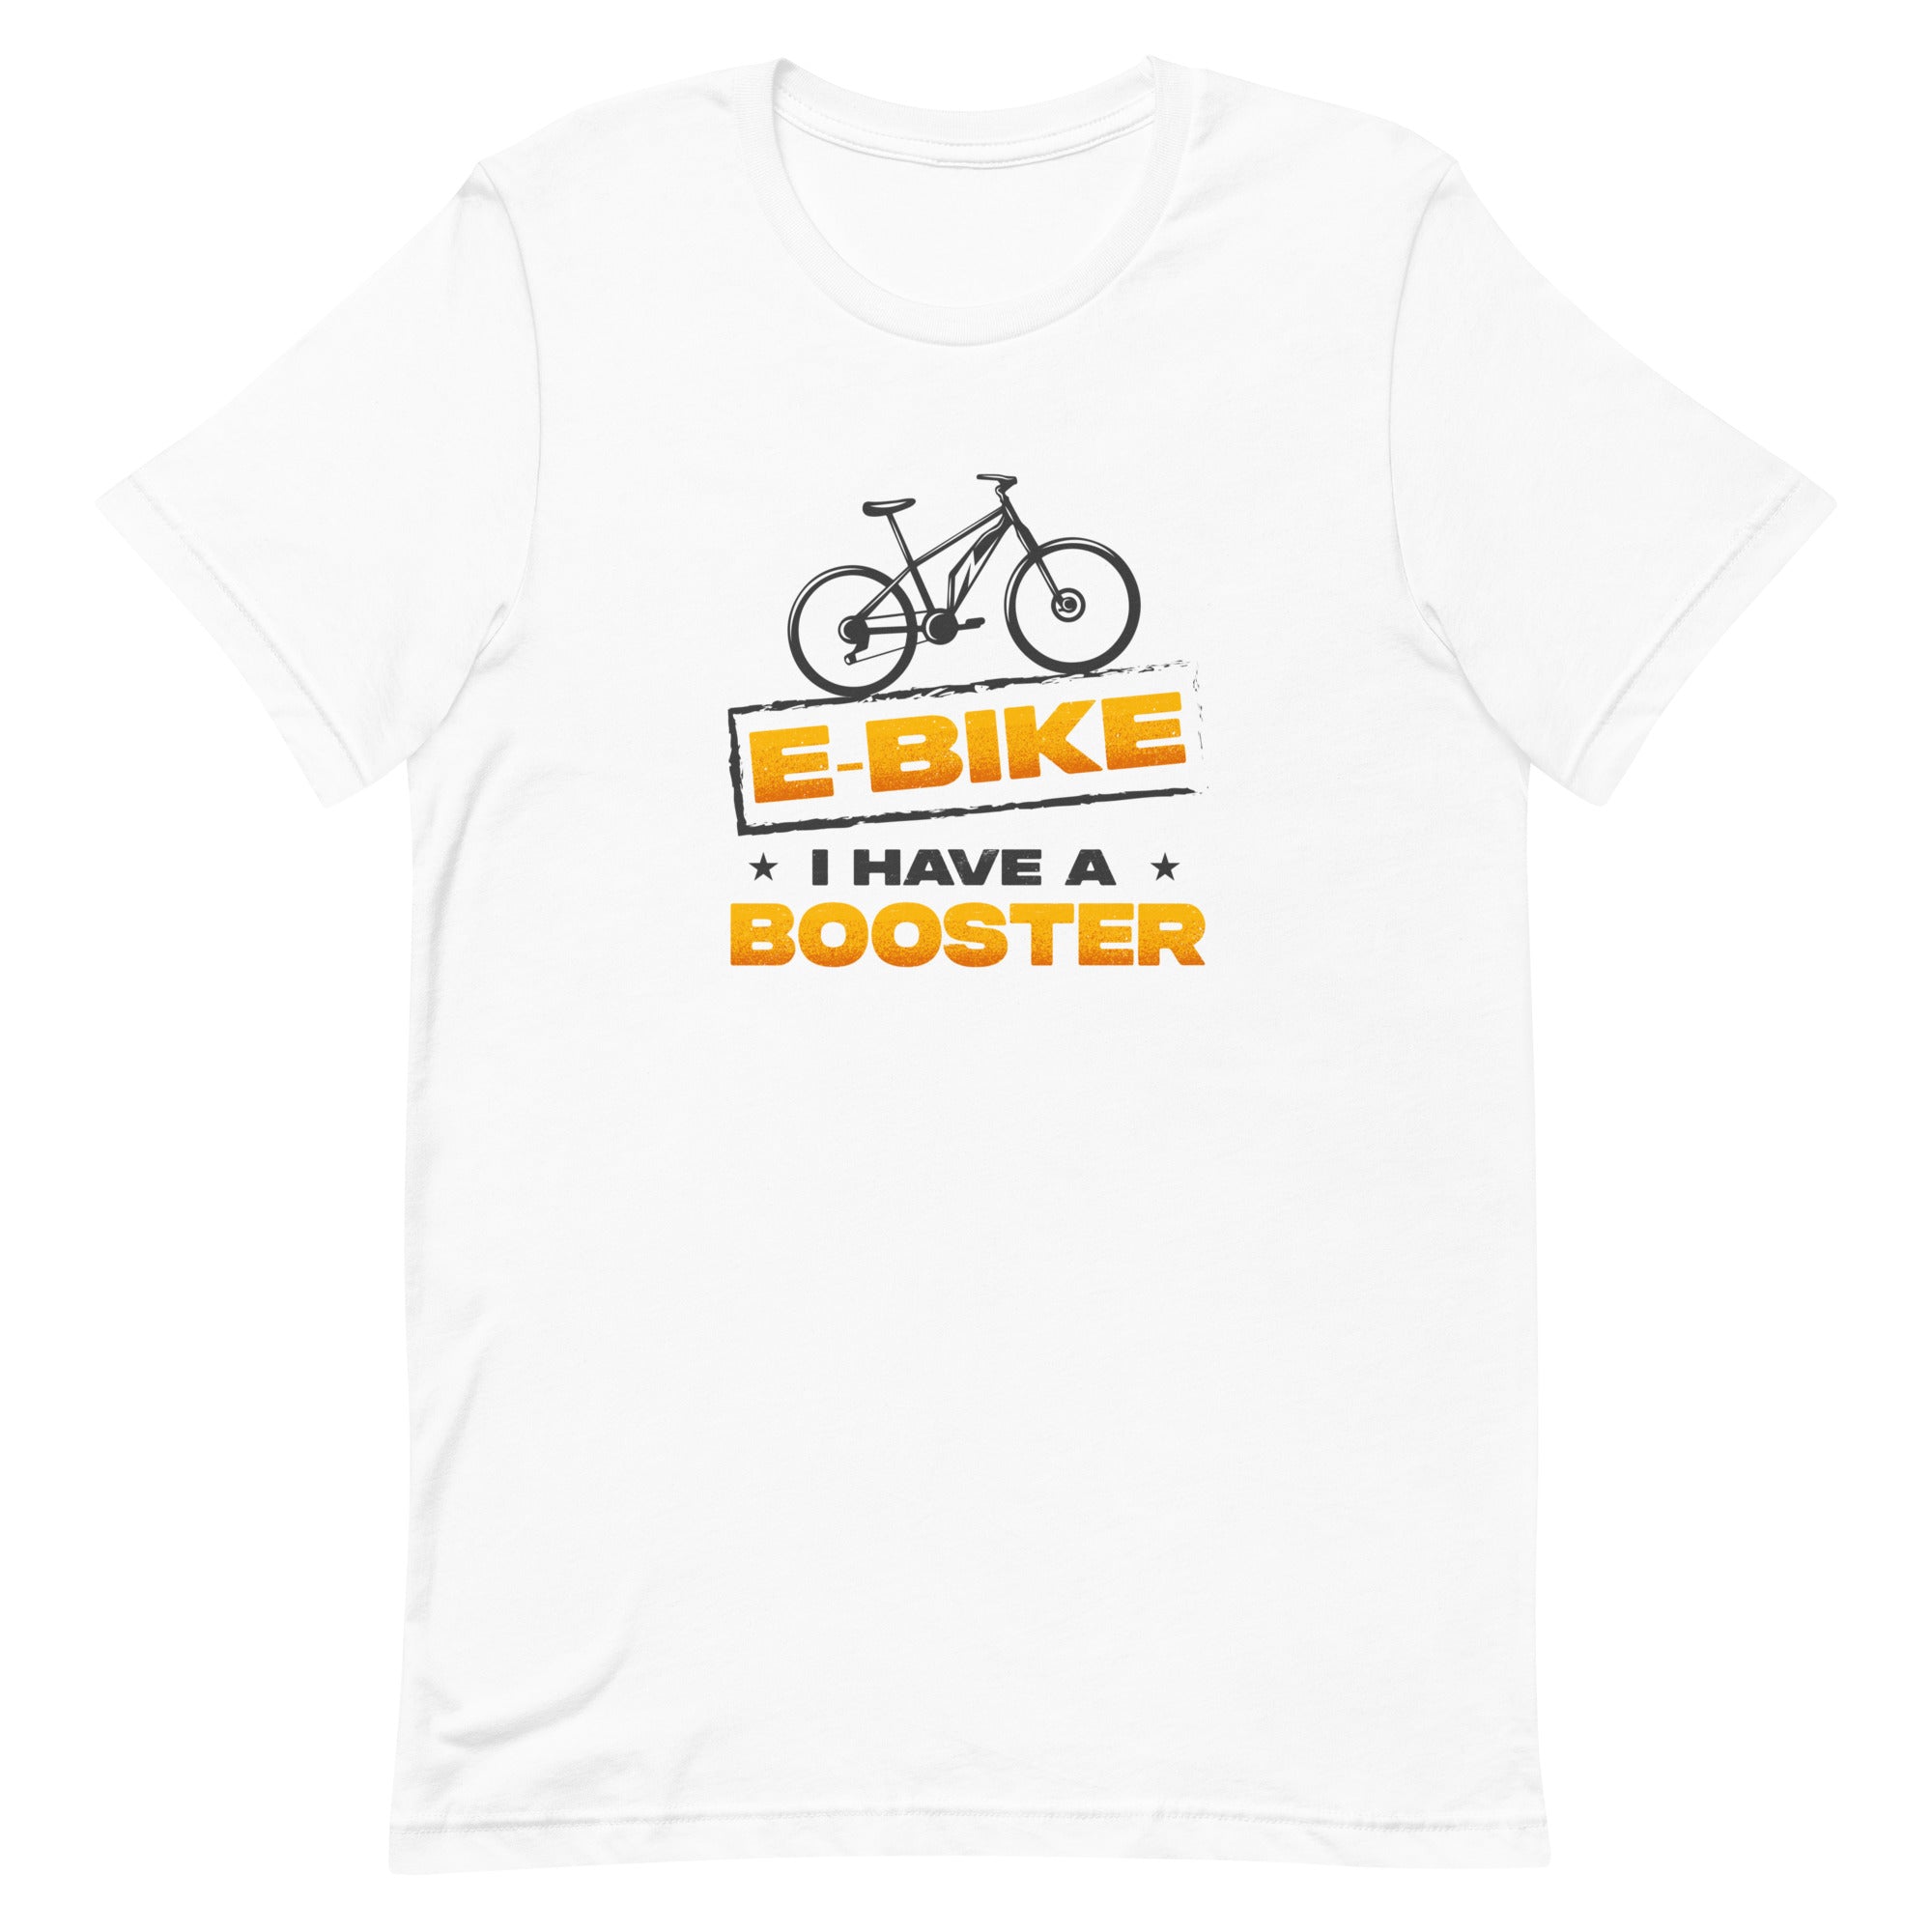 E-bike I Have a Booster Bella + Canvas 3001 Women’s T-shirt